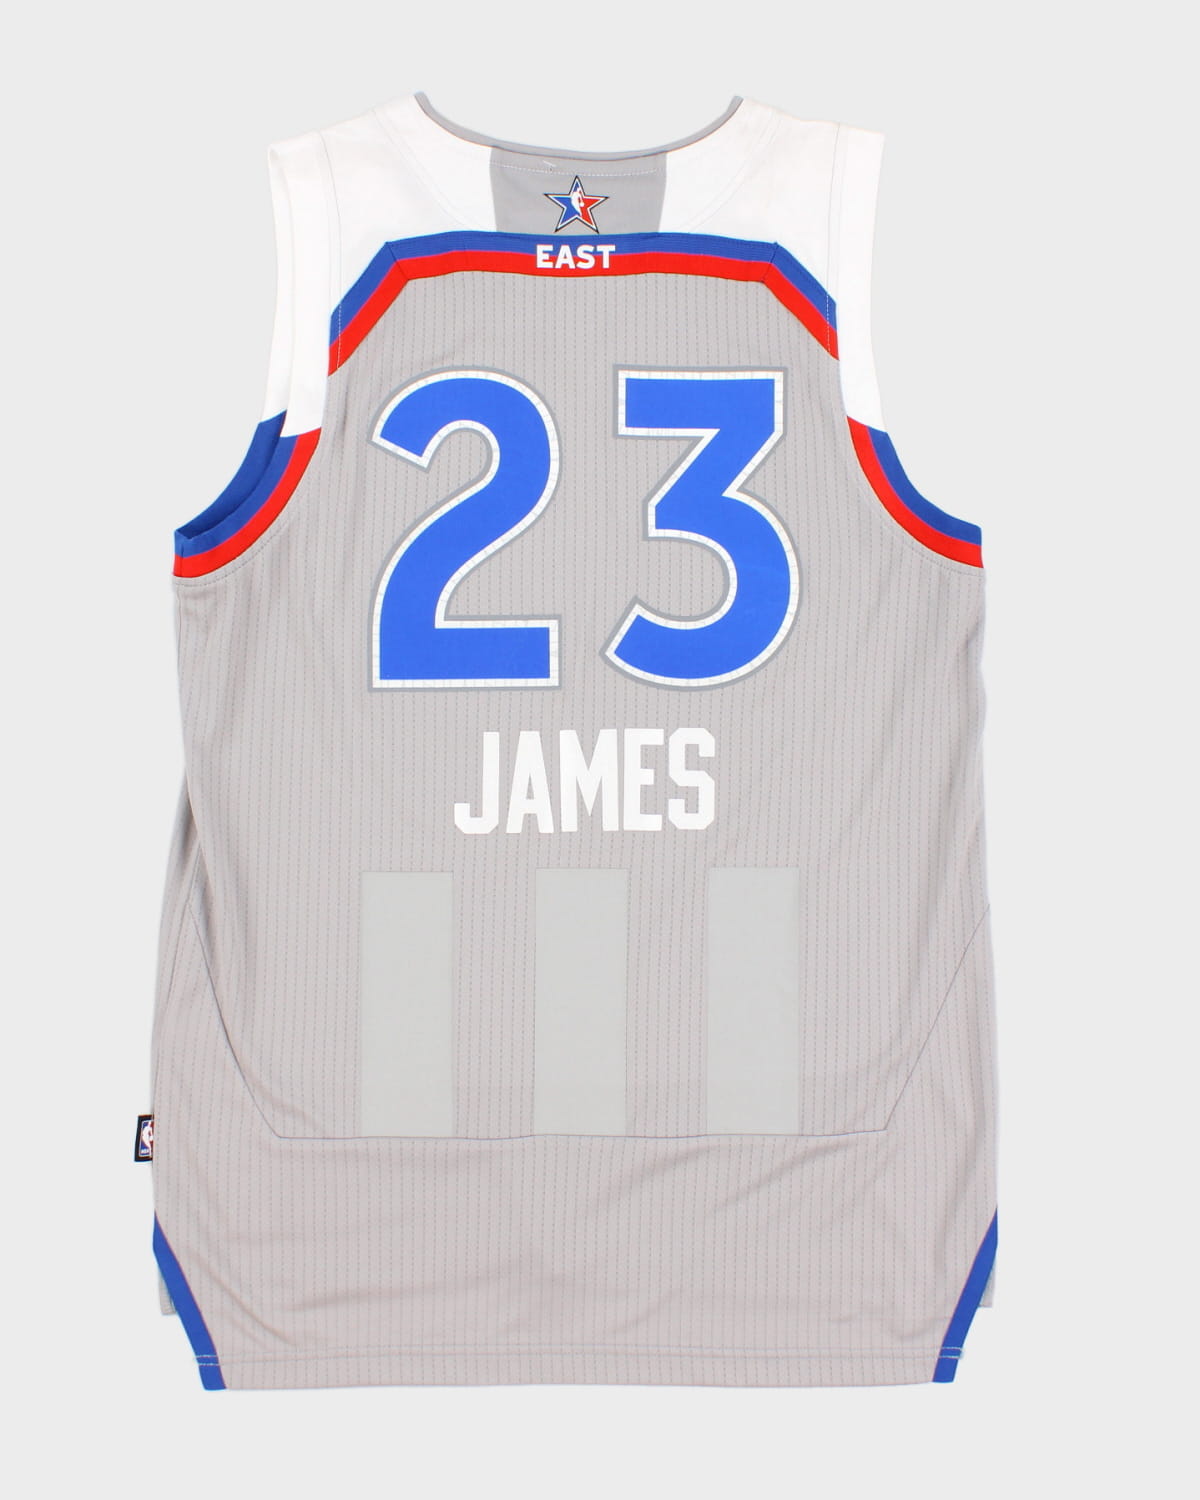 Deadstock NBA x East All Star Lebron James #23 Basketball Jersey - M